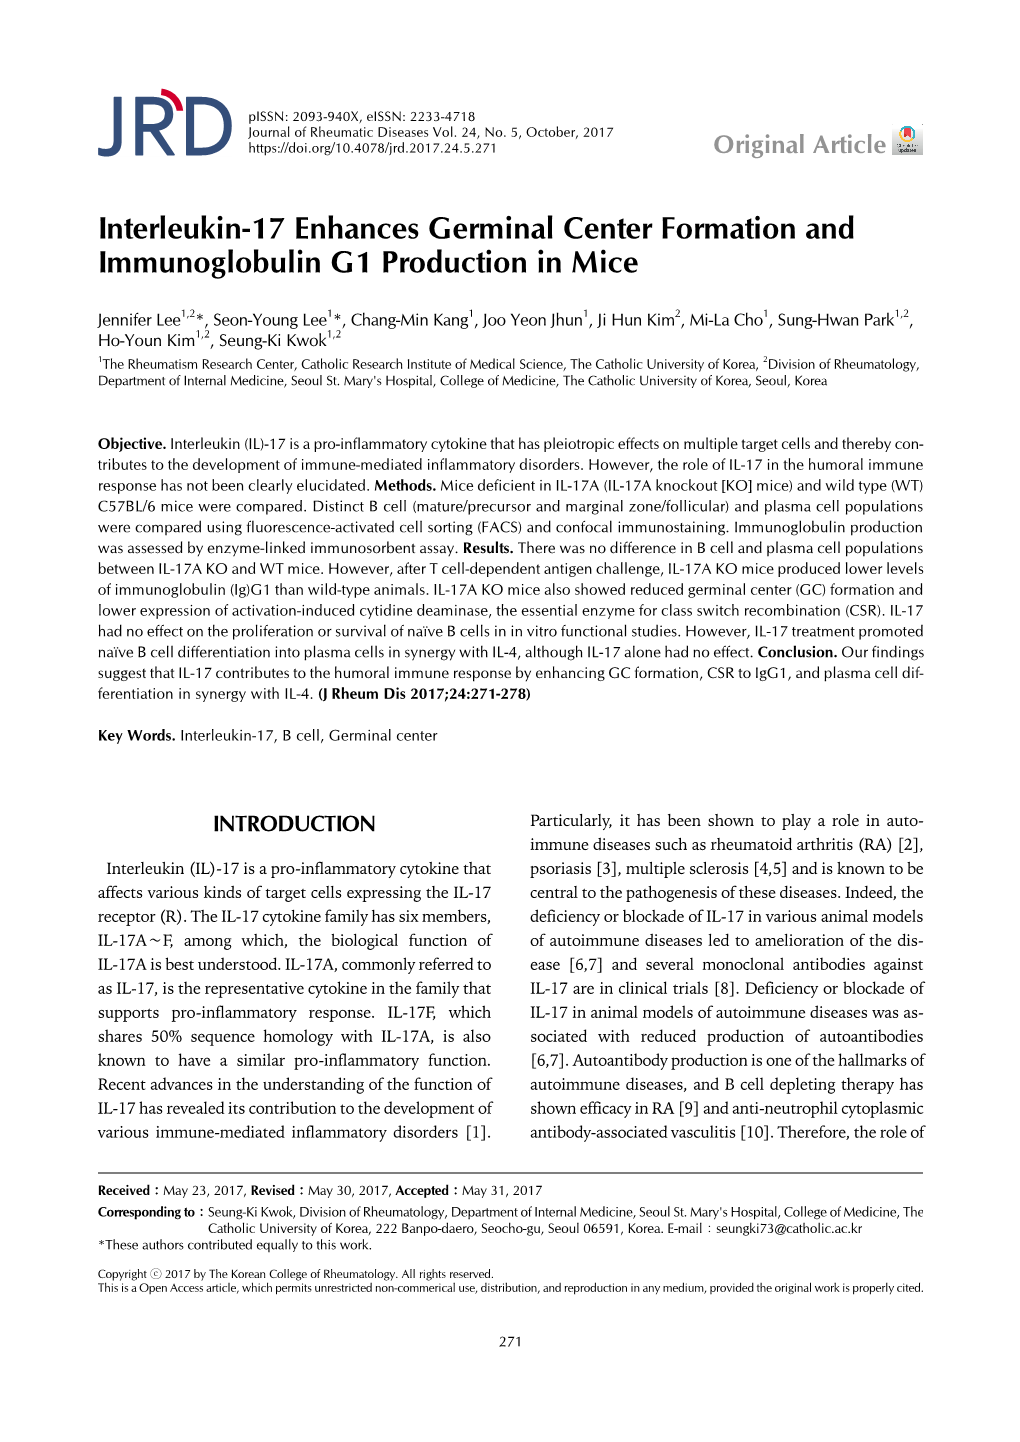 Interleukin-17 Enhances Germinal Center Formation and Immunoglobulin G1 Production in Mice